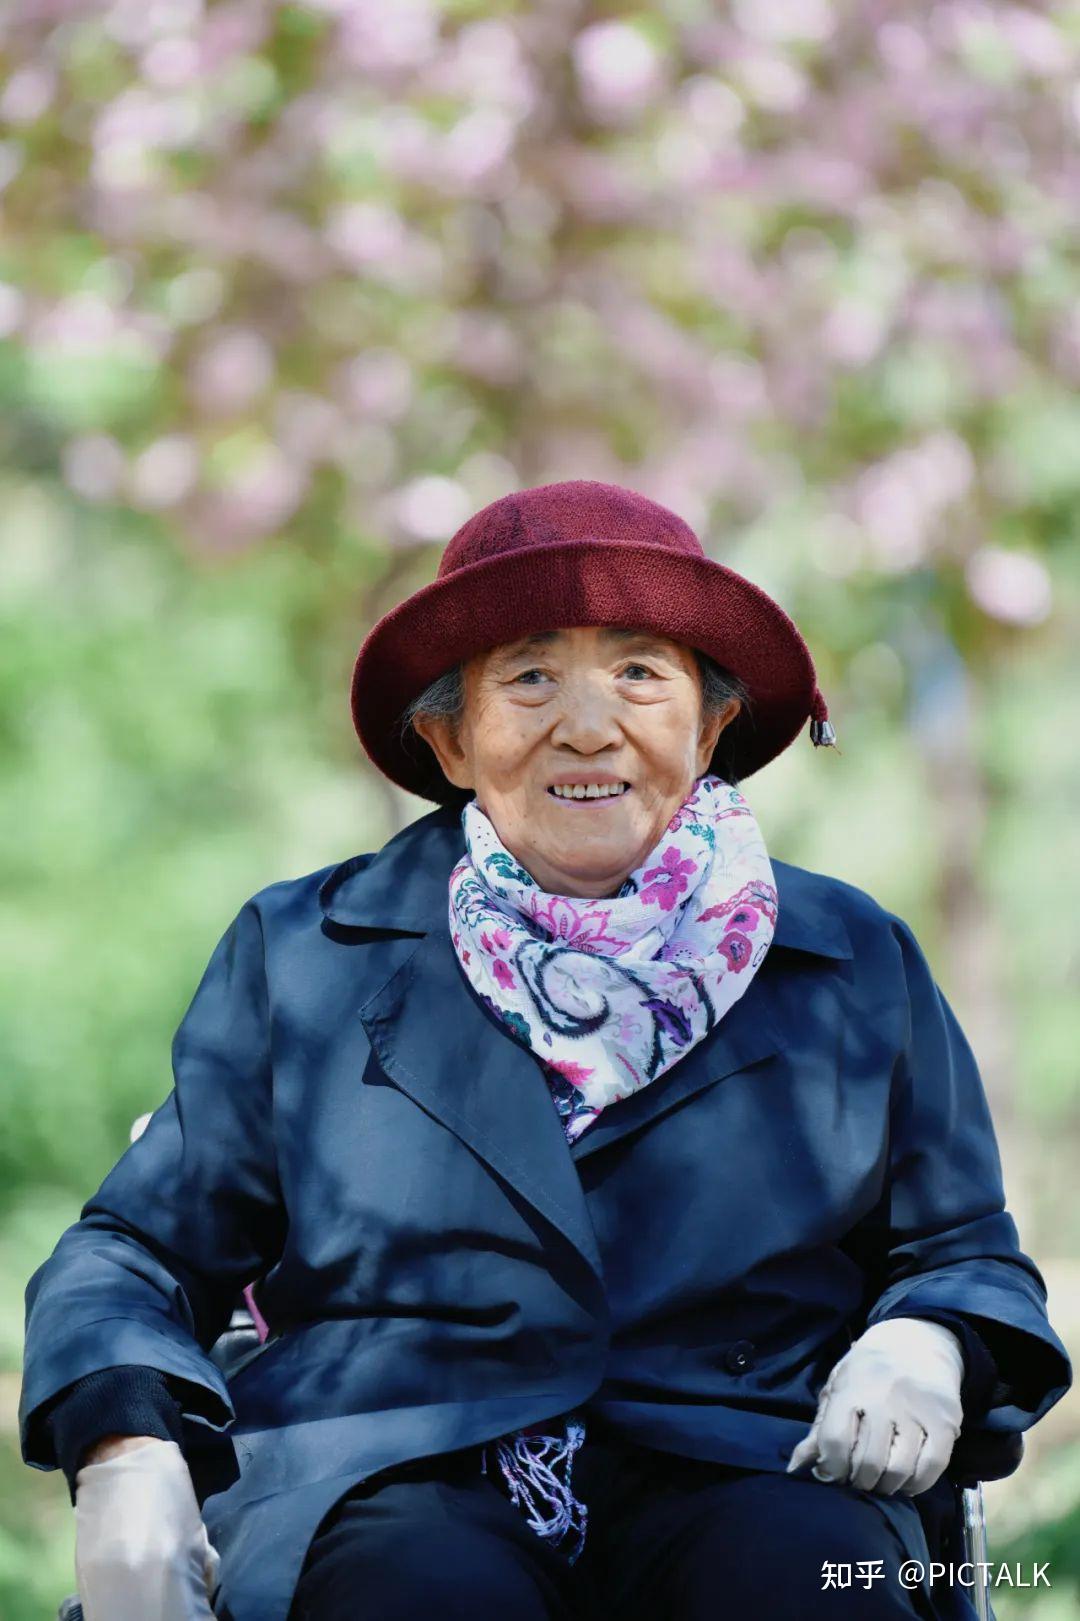 pictalk北京线下拍照活动100位最美老人笑容